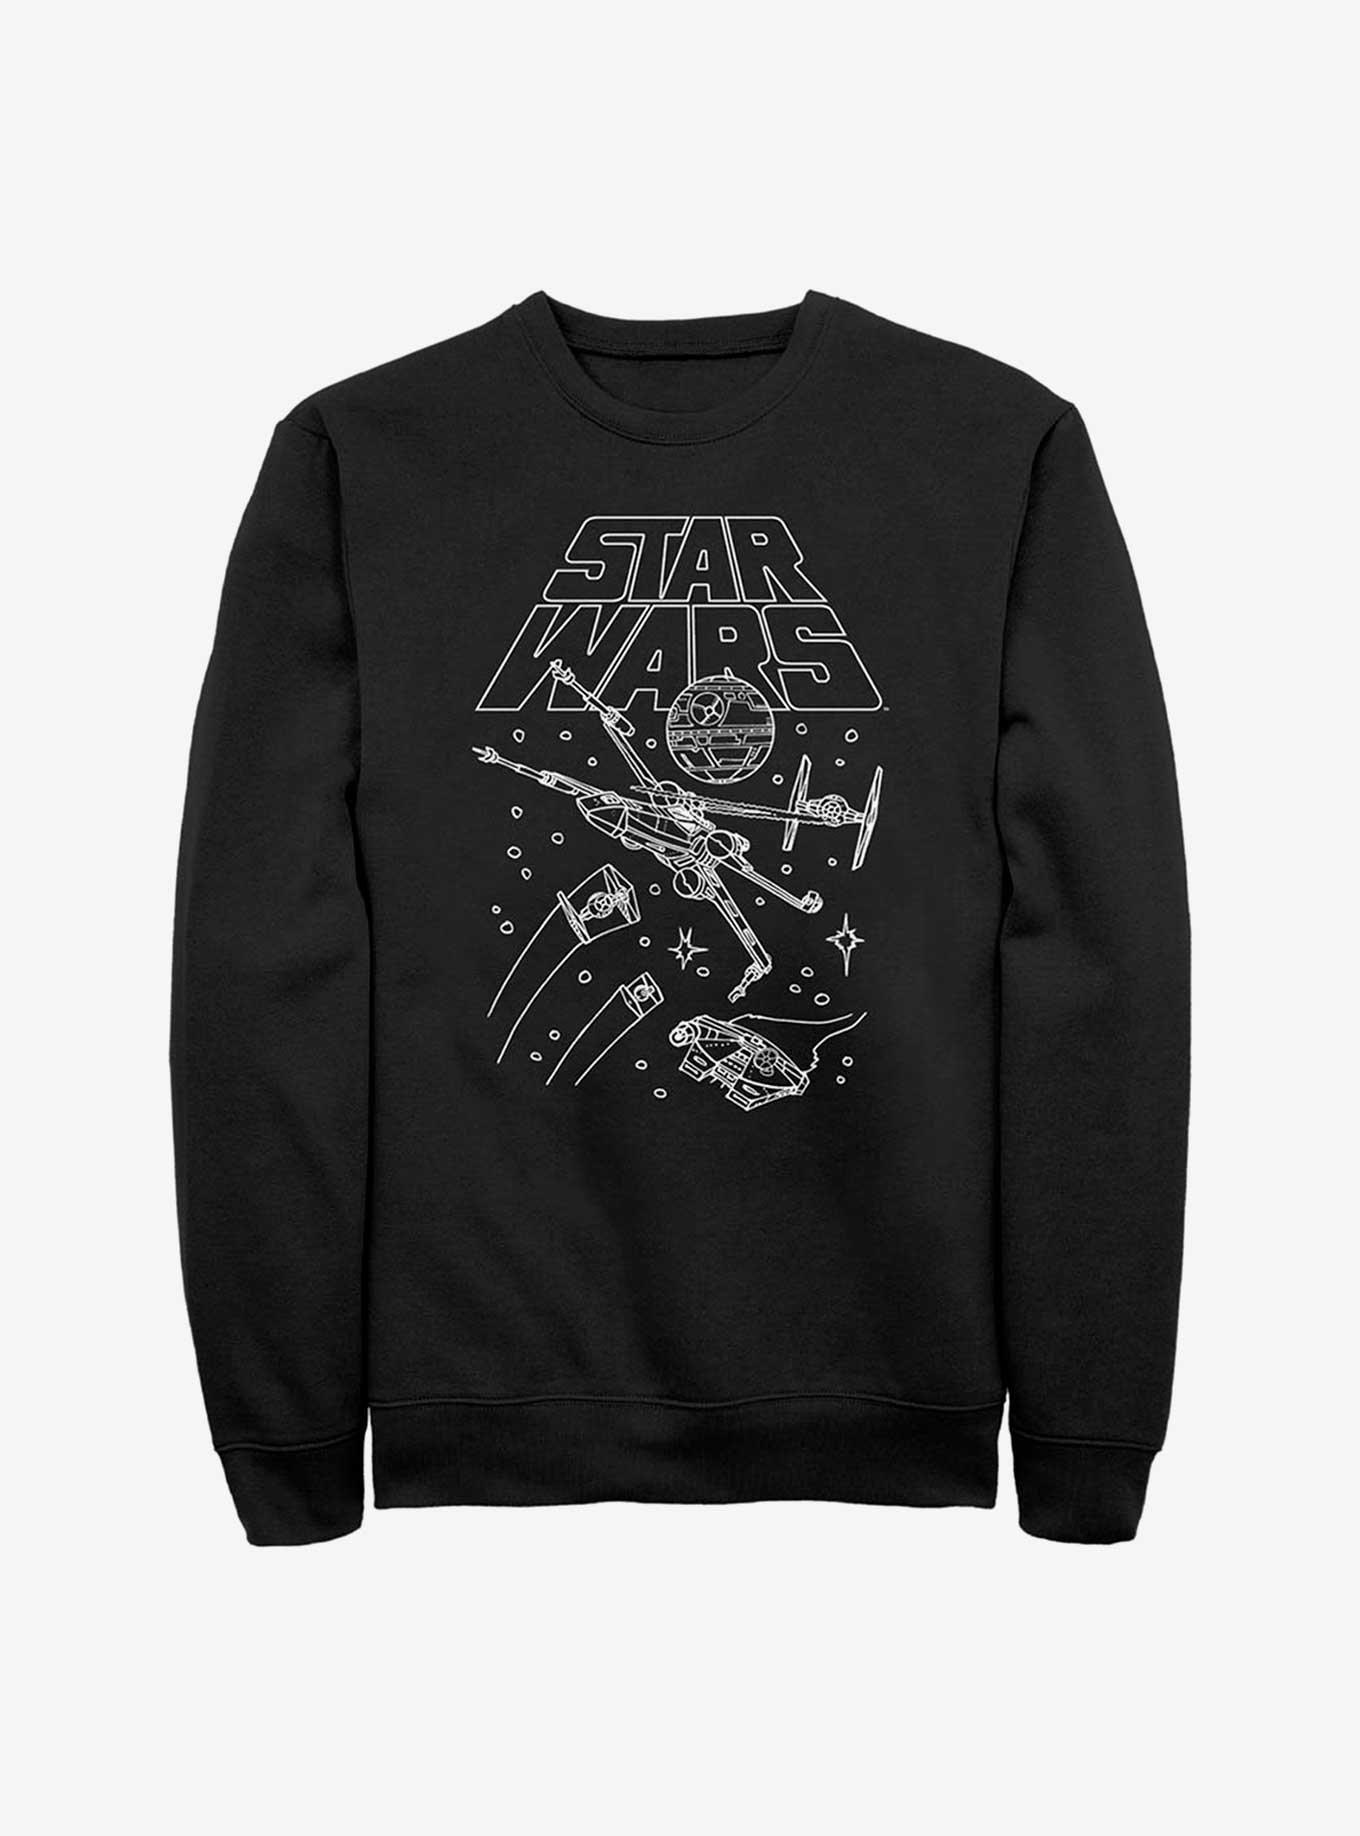 Star Wars Space Fight Sweatshirt, BLACK, hi-res